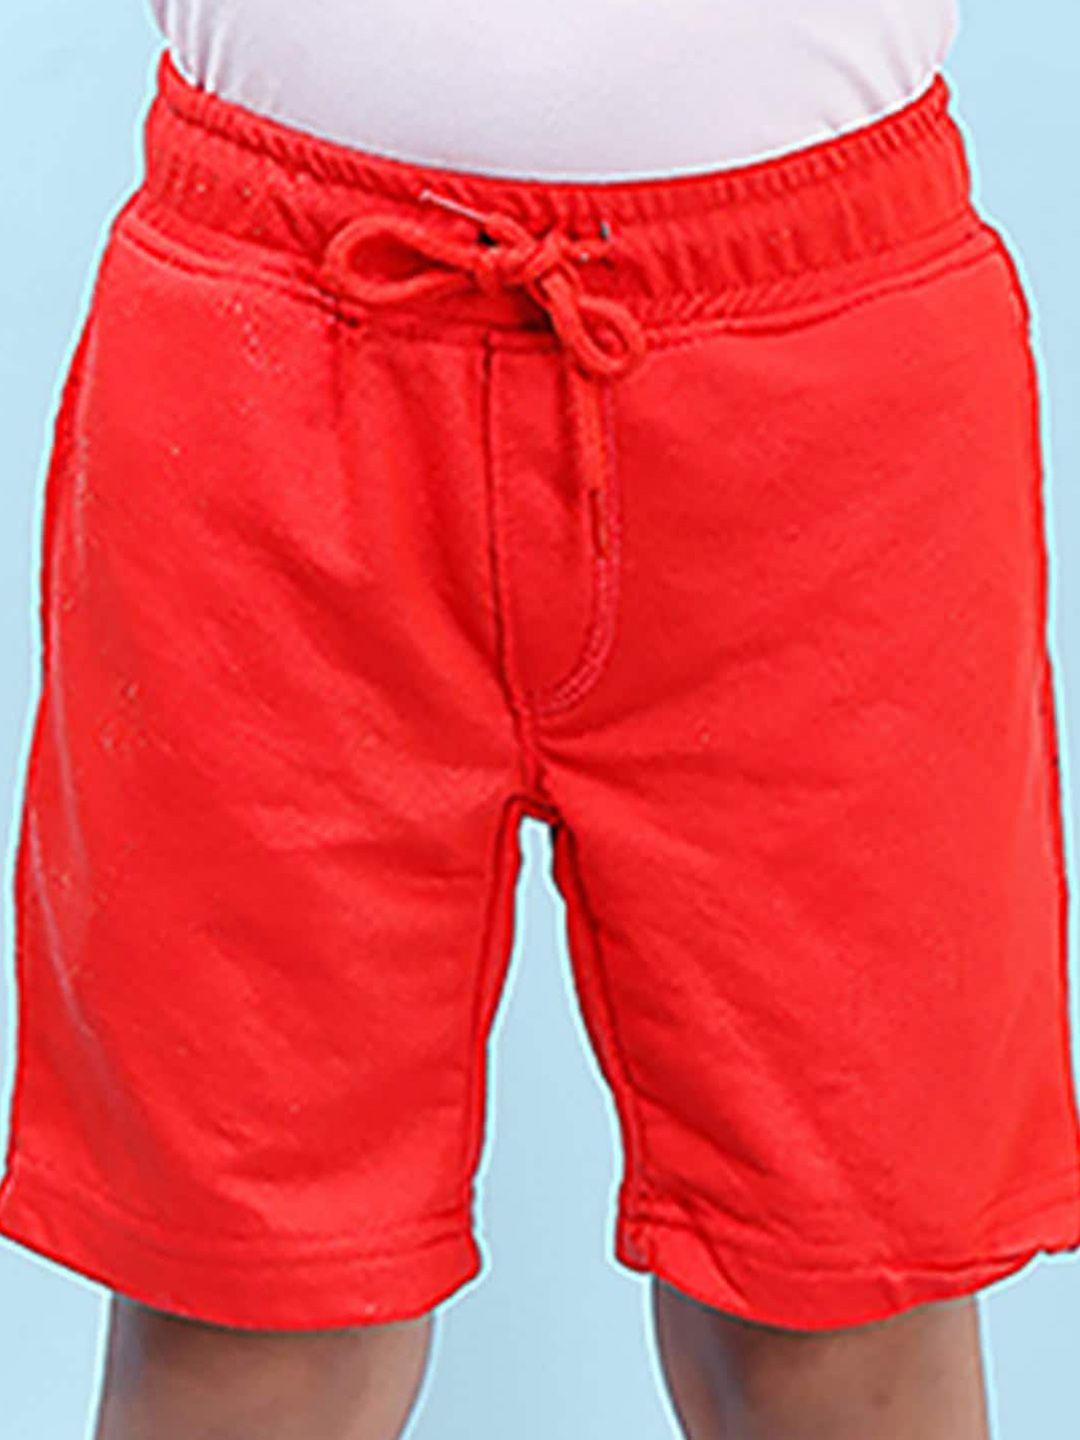 nusyl boys mid-rise shorts